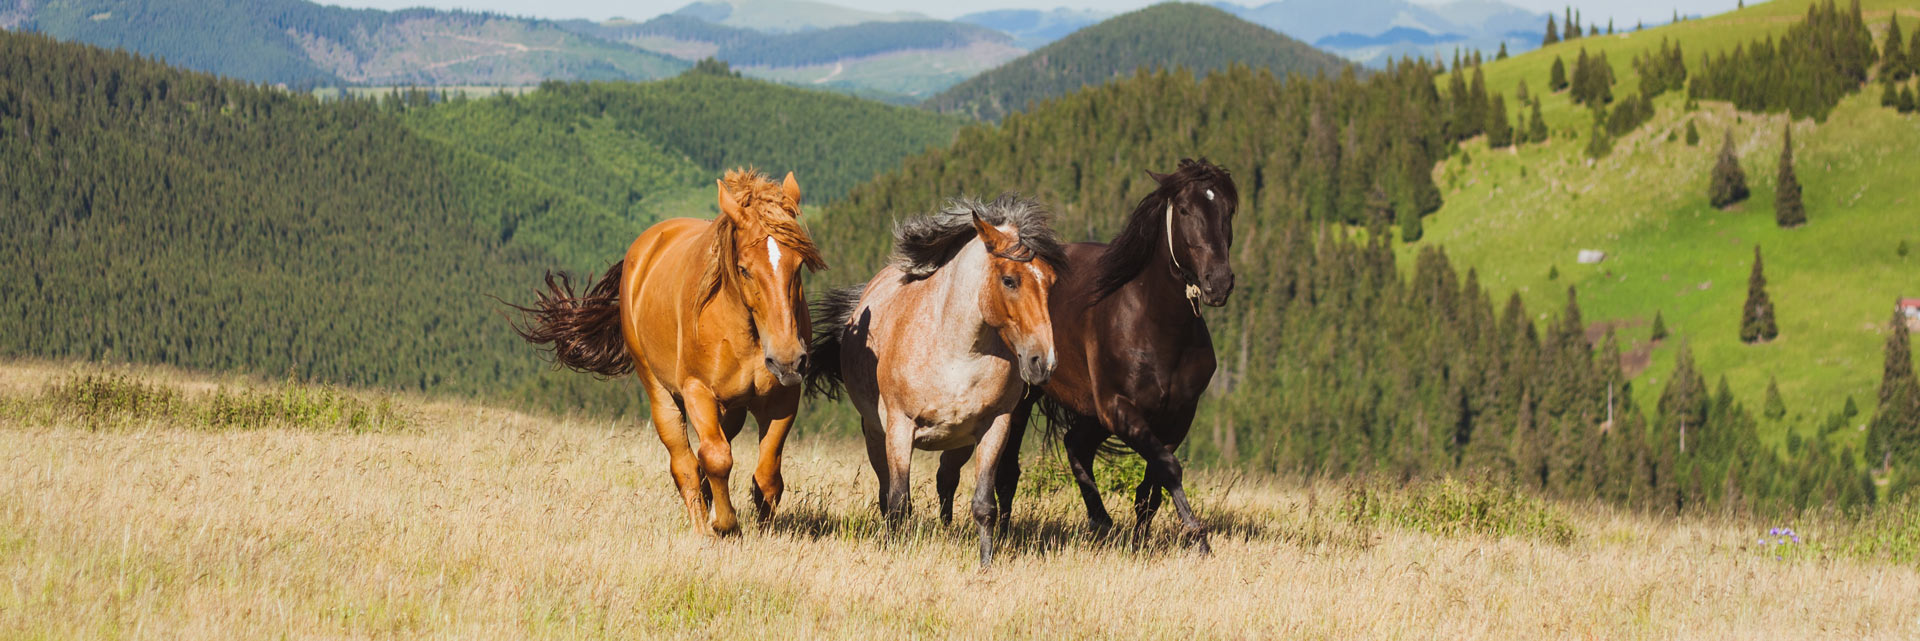 Wild horses in Grayson Highlands, Virginia.